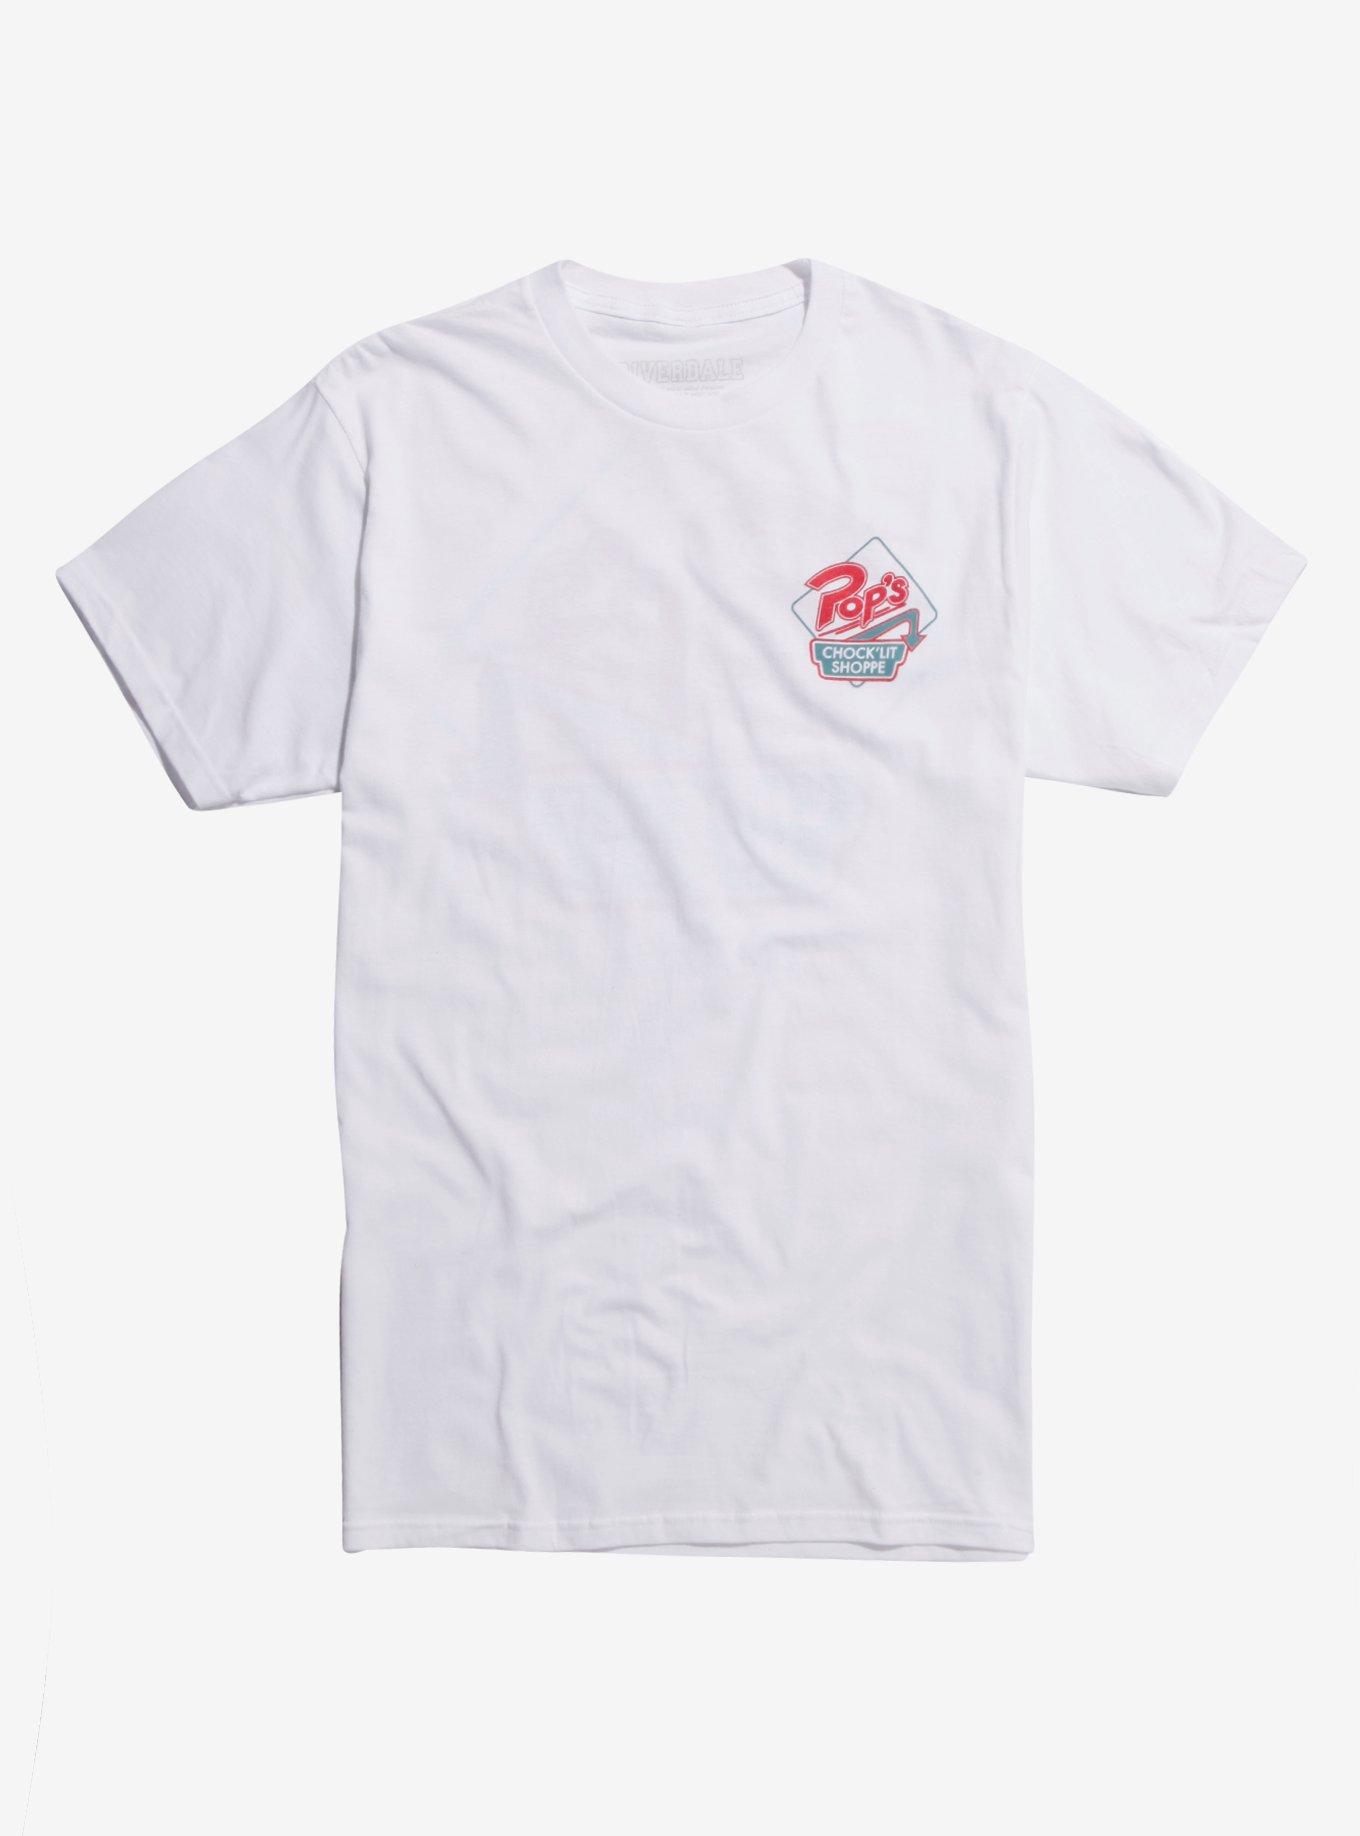 Riverdale Pop's Chock'Lit Shoppe T-Shirt | Hot Topic